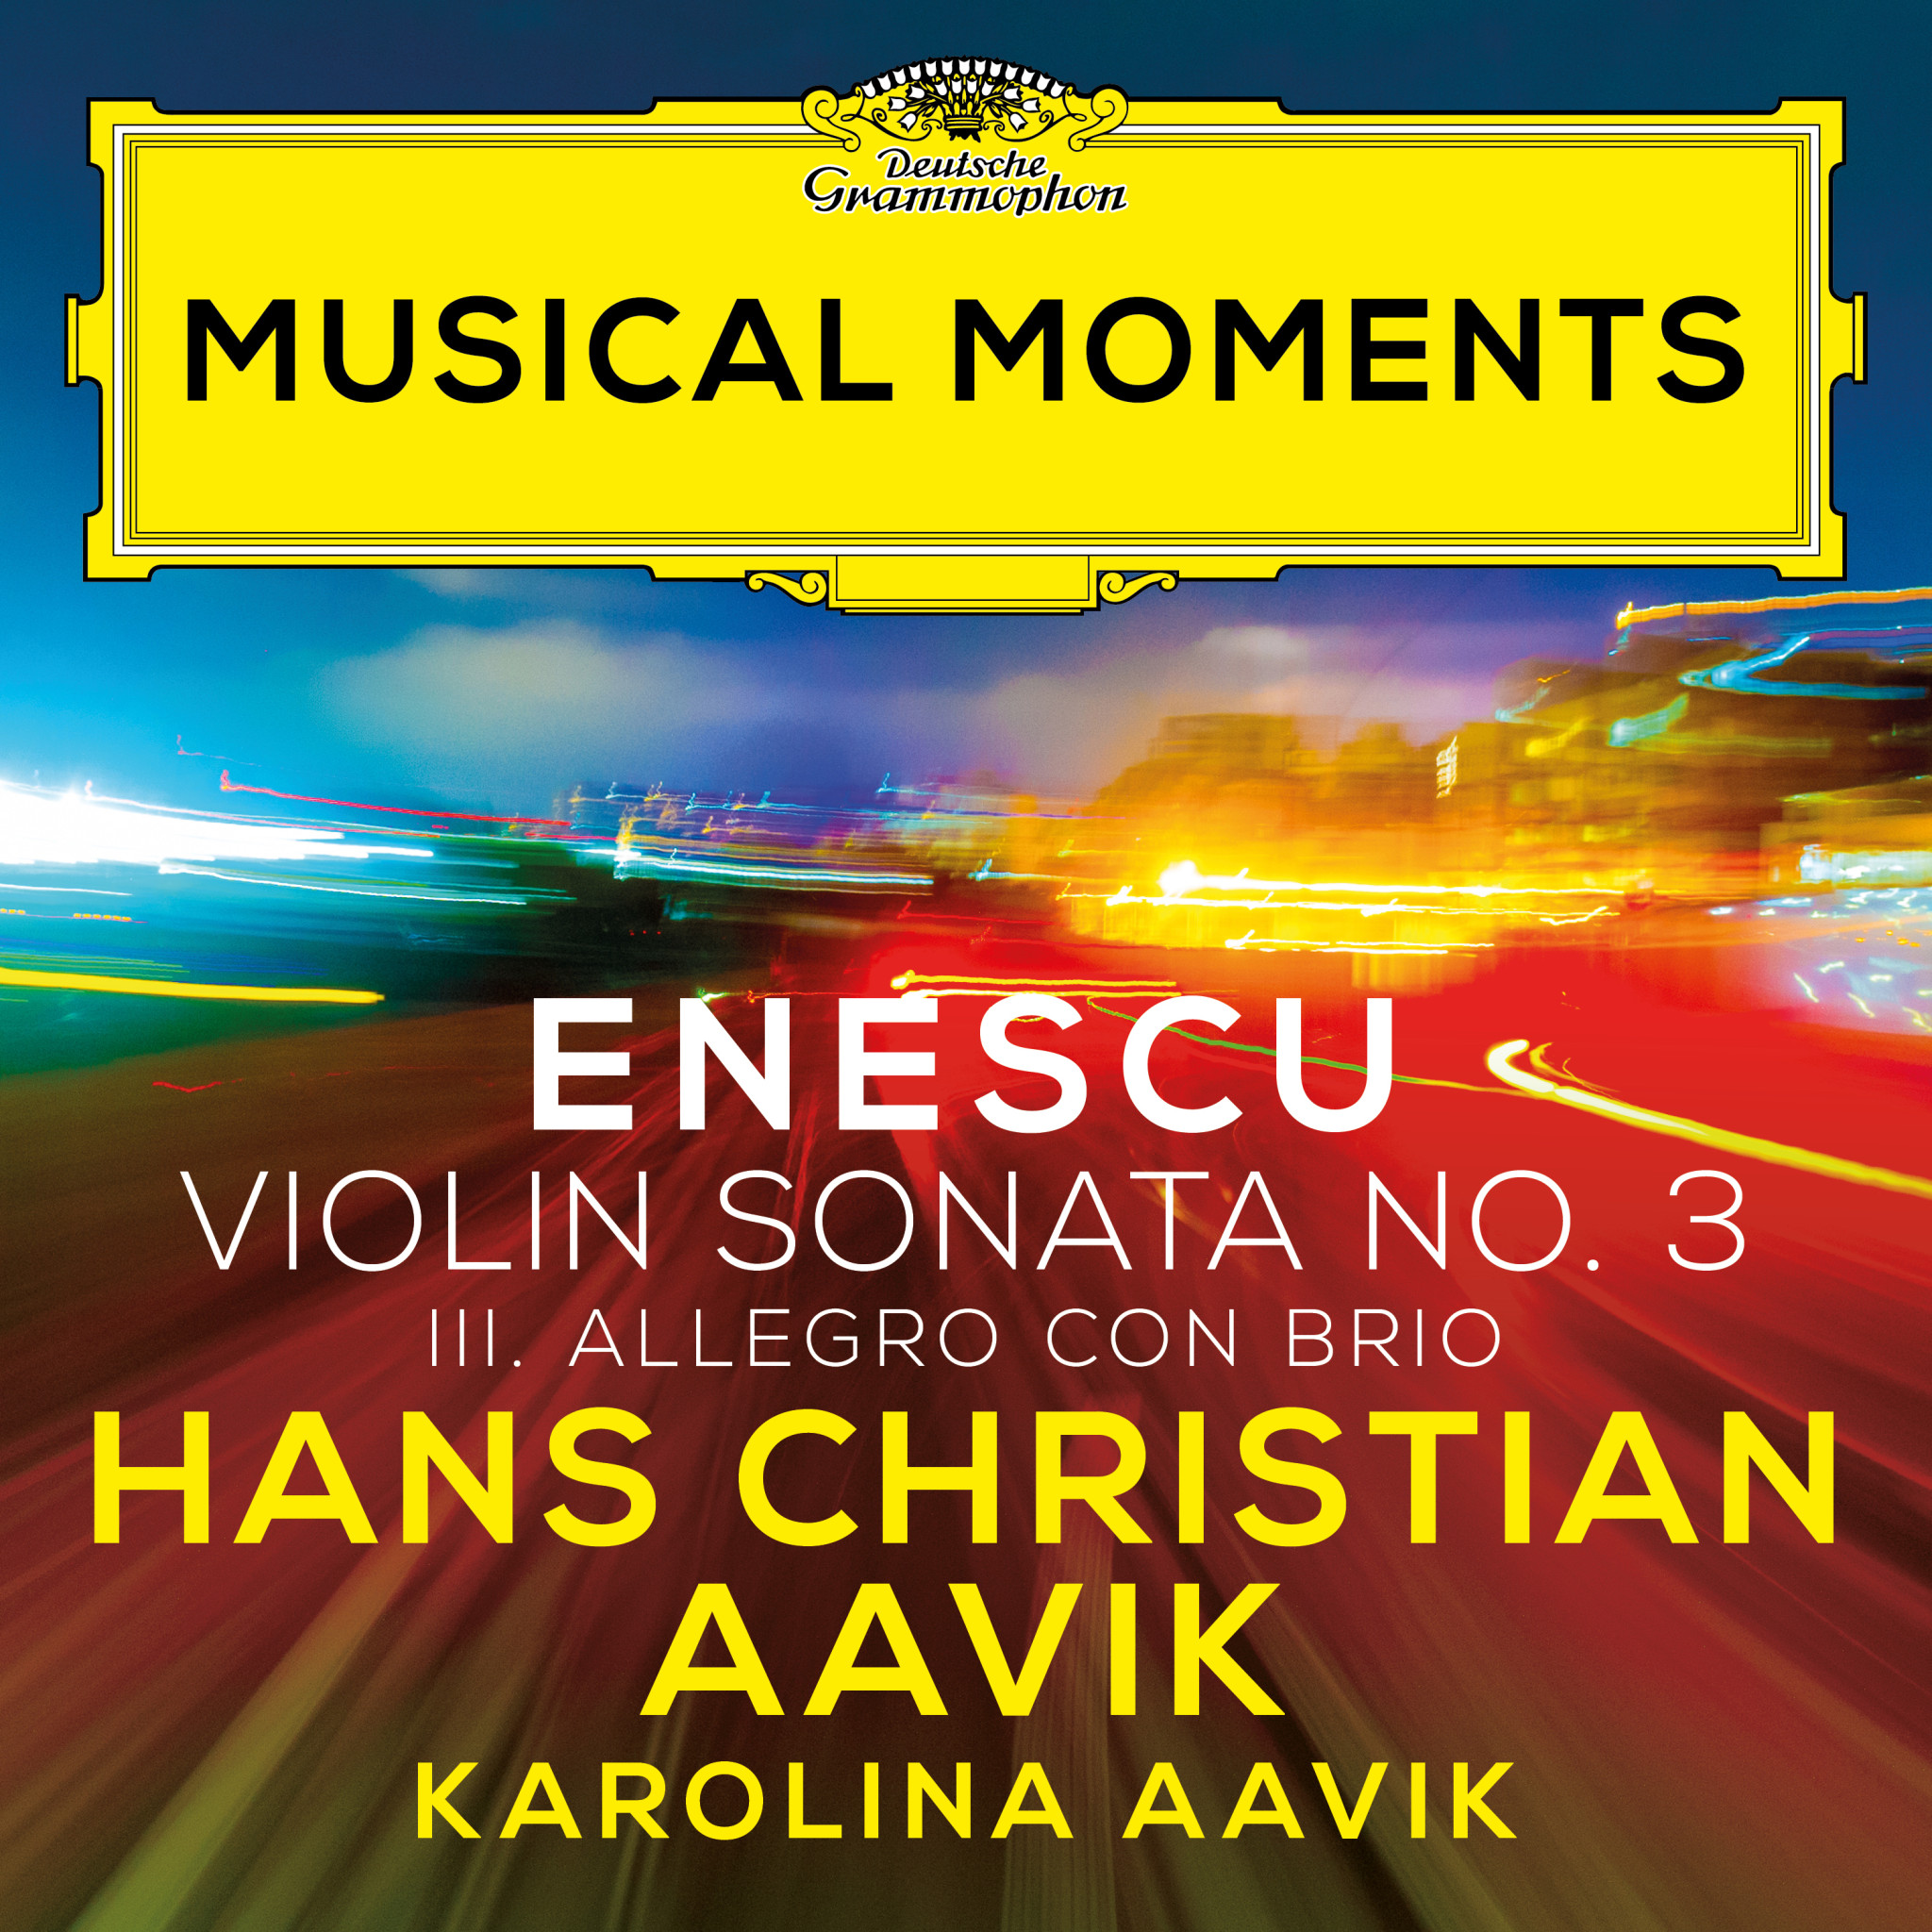 Hans Christian Aavik - George Enescu: Violin Sonata No. 3 in A Minor, Op. 25